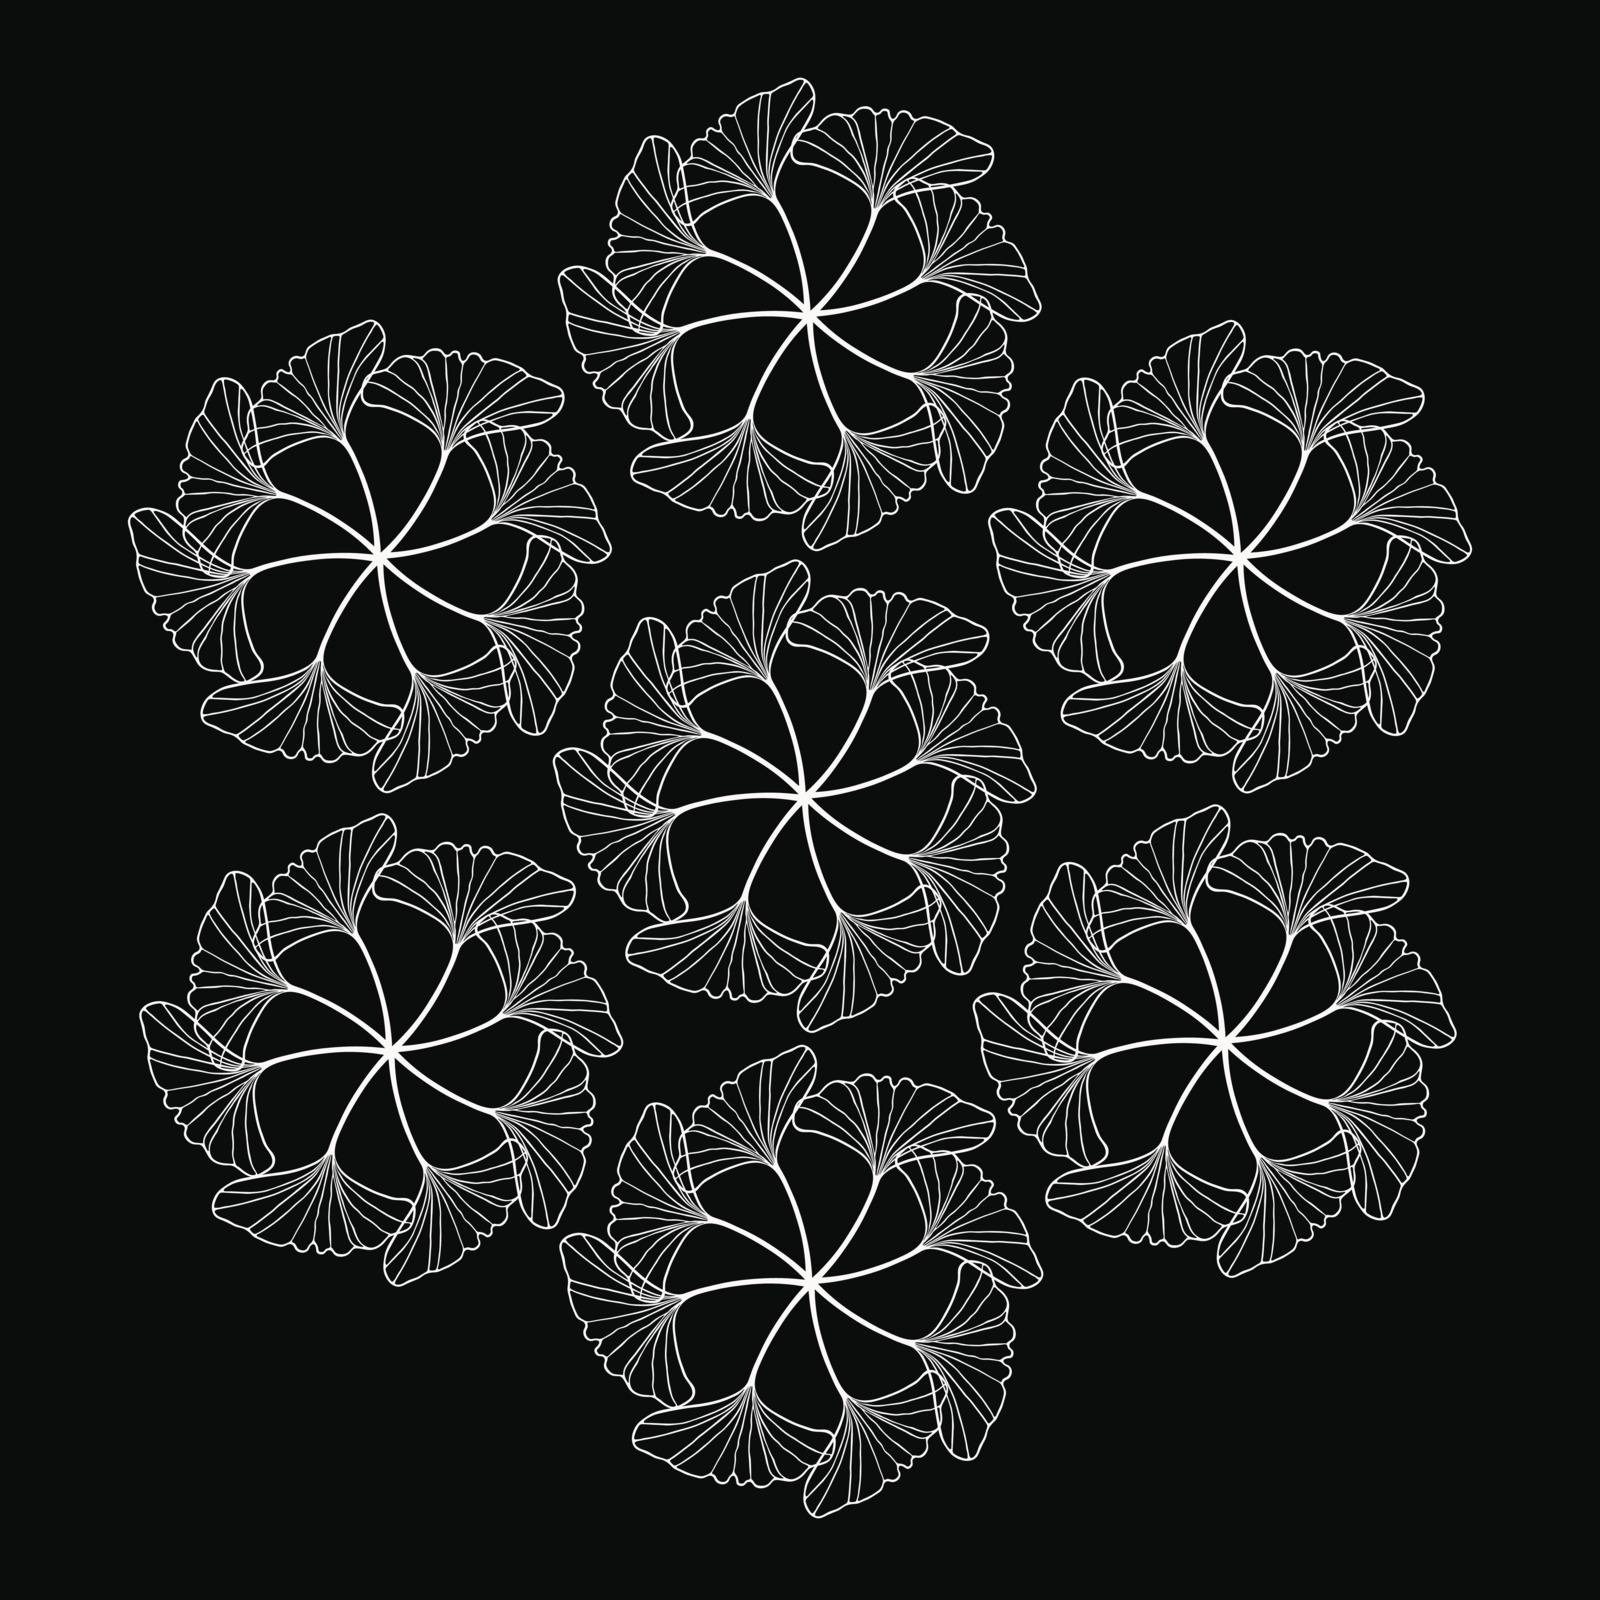 white gingko leaf circle sketch doodle pattern on black background